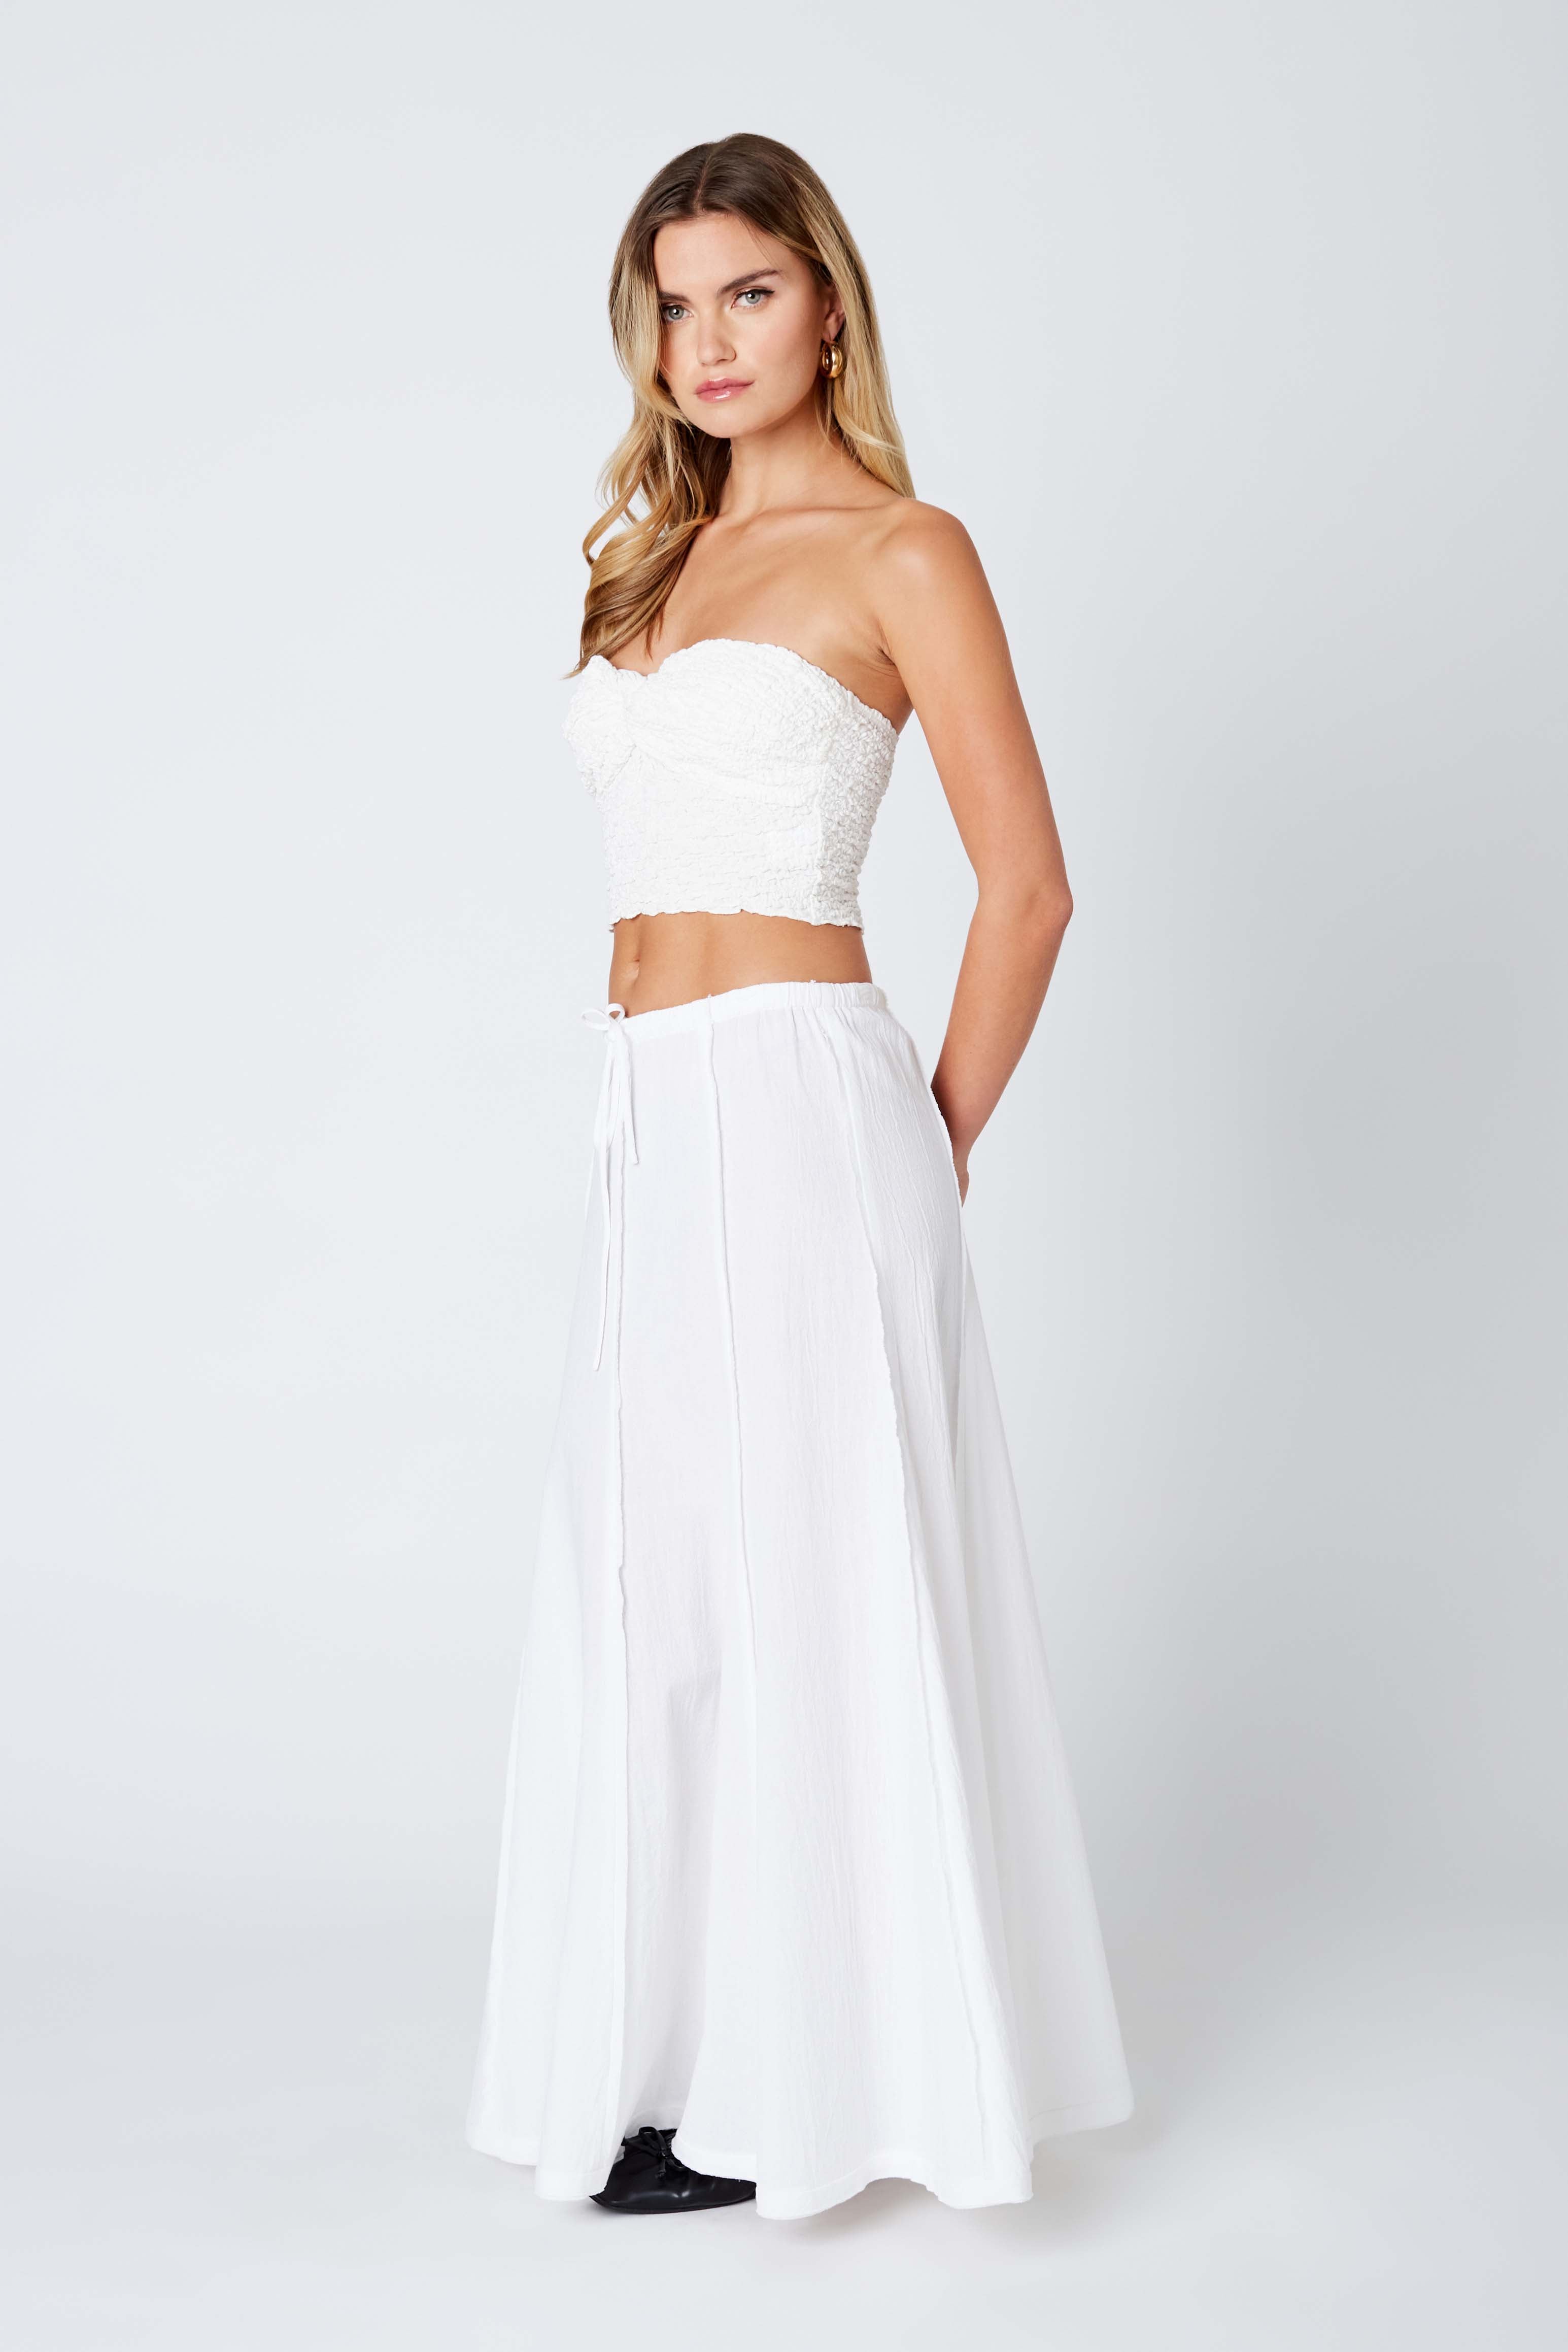 Linen Maxi Skirt in White Side View